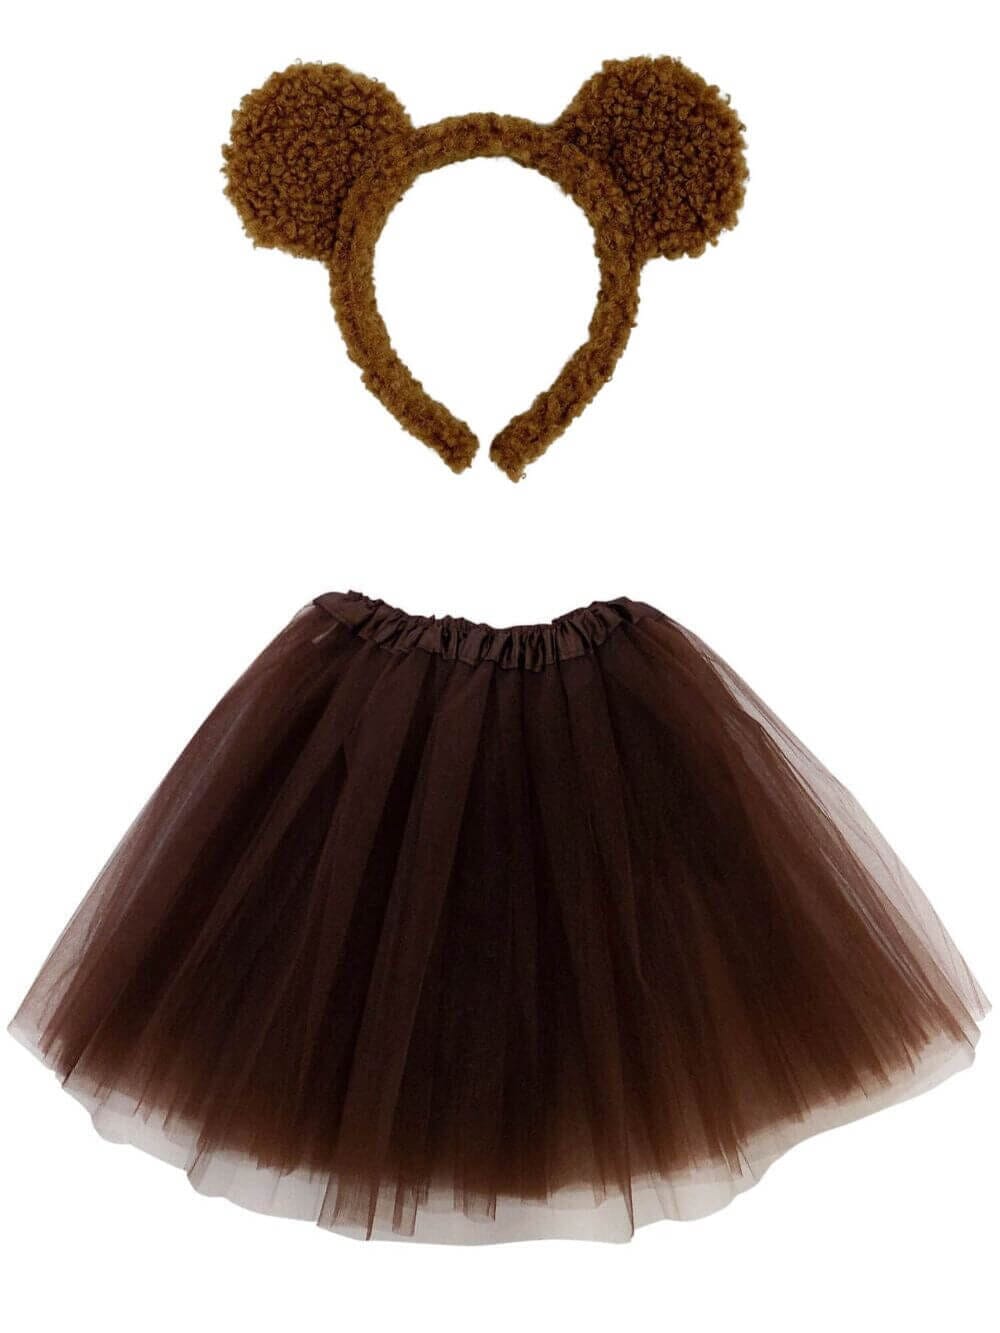 Adult Brown Bear Costume - Tutu Skirt, Tail, & Headband Set for Adult or Plus Size - Sydney So Sweet